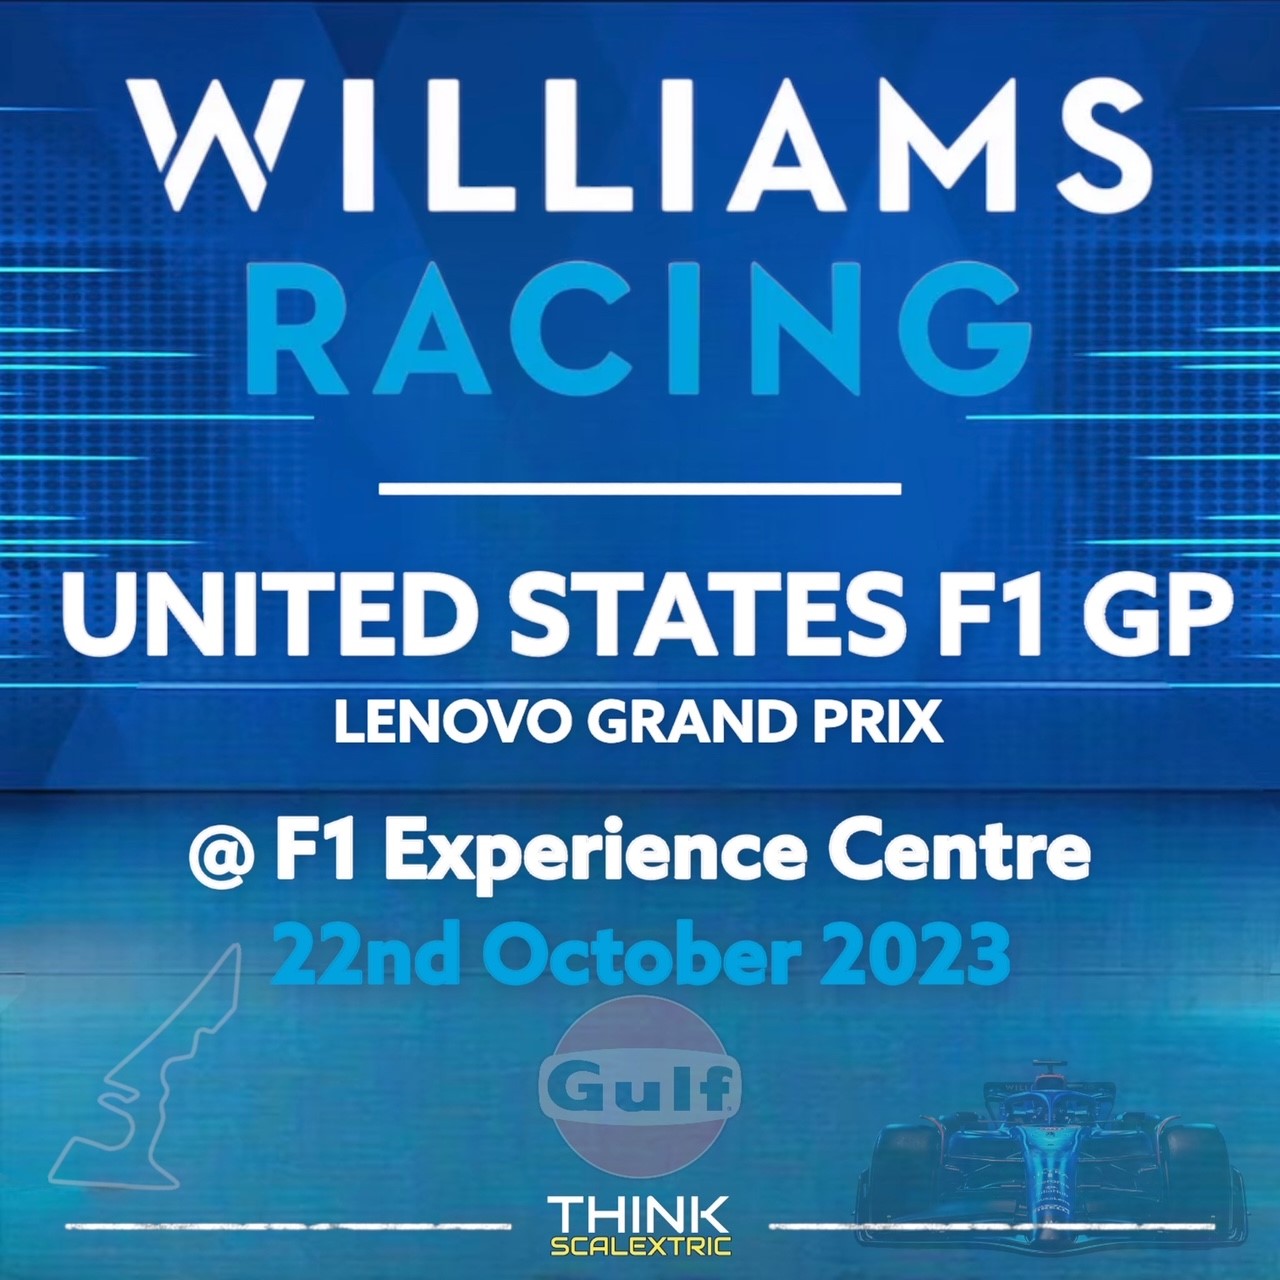 williams f1 racing race day hospitality united states f1 2023 gp